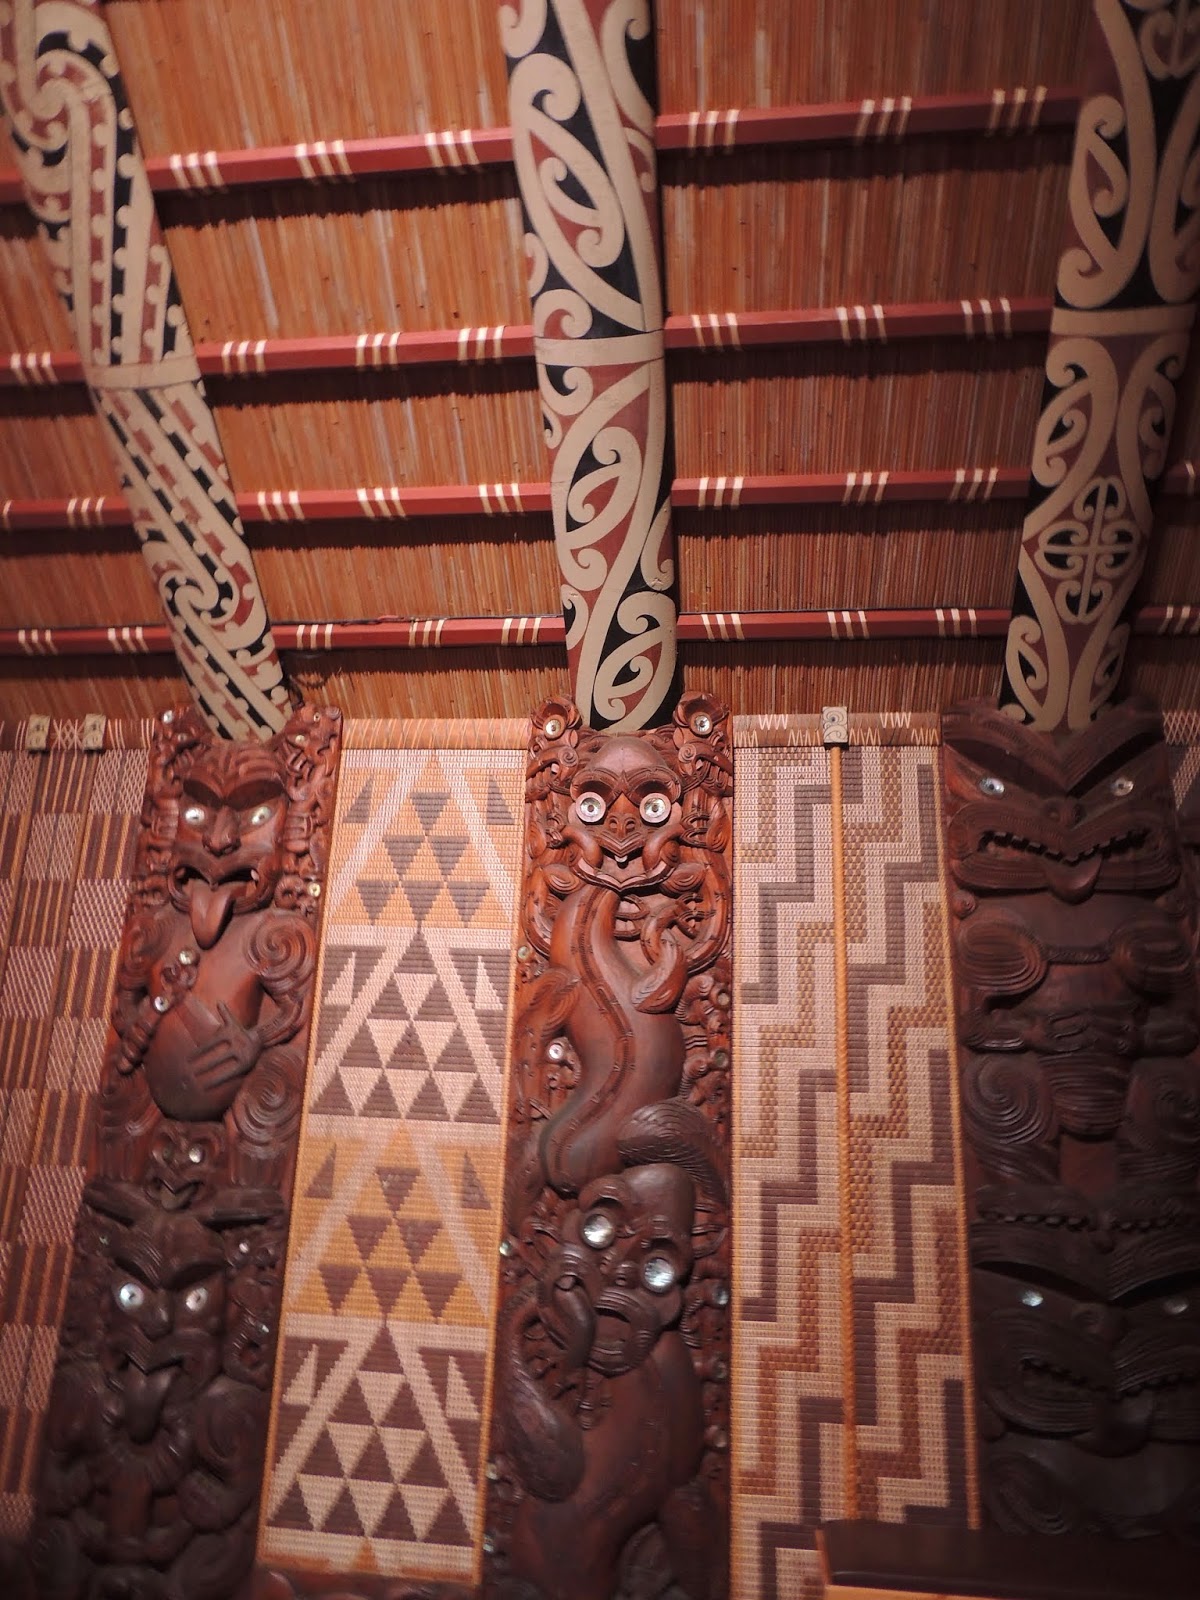 THE ROAD TAKEN : A Visit to the Waitangi Treaty Grounds